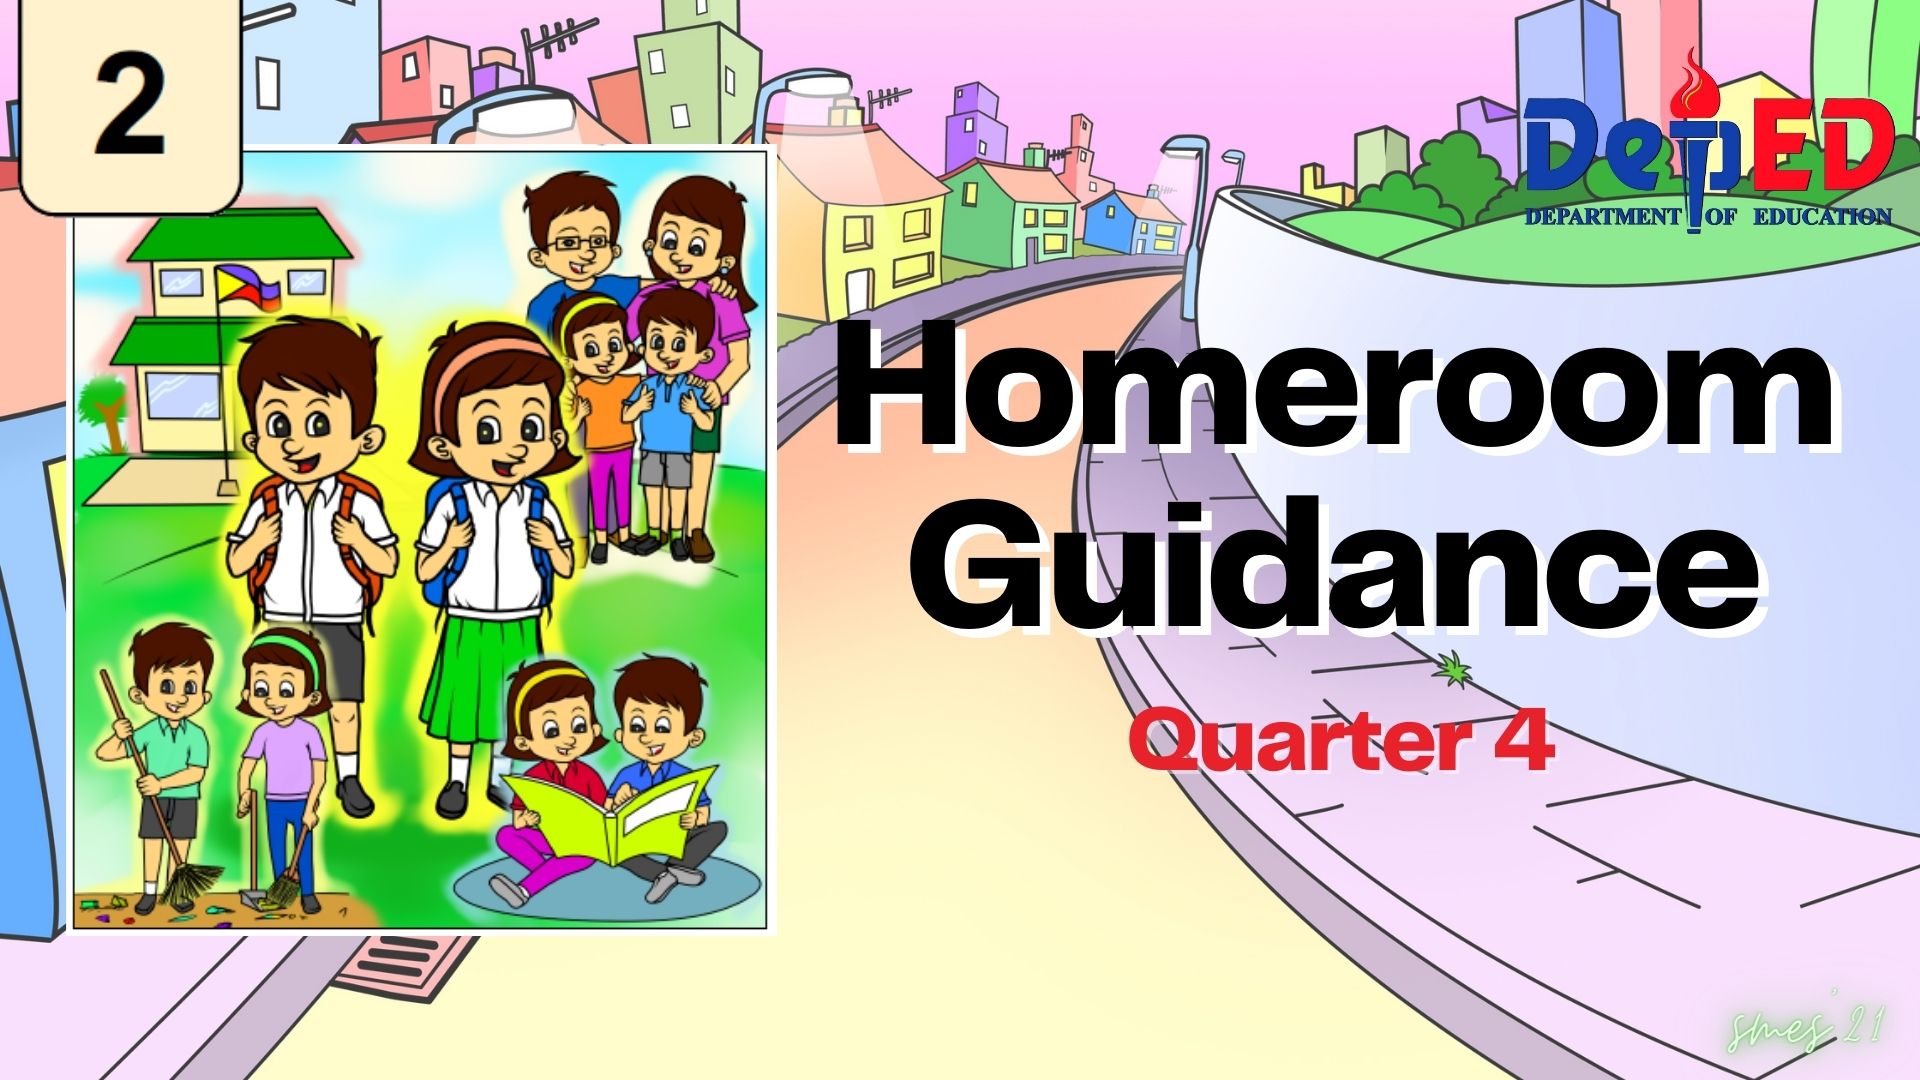 G2 - Homeroom Guidance Quarter 4 Cyrene Joy Rapadas